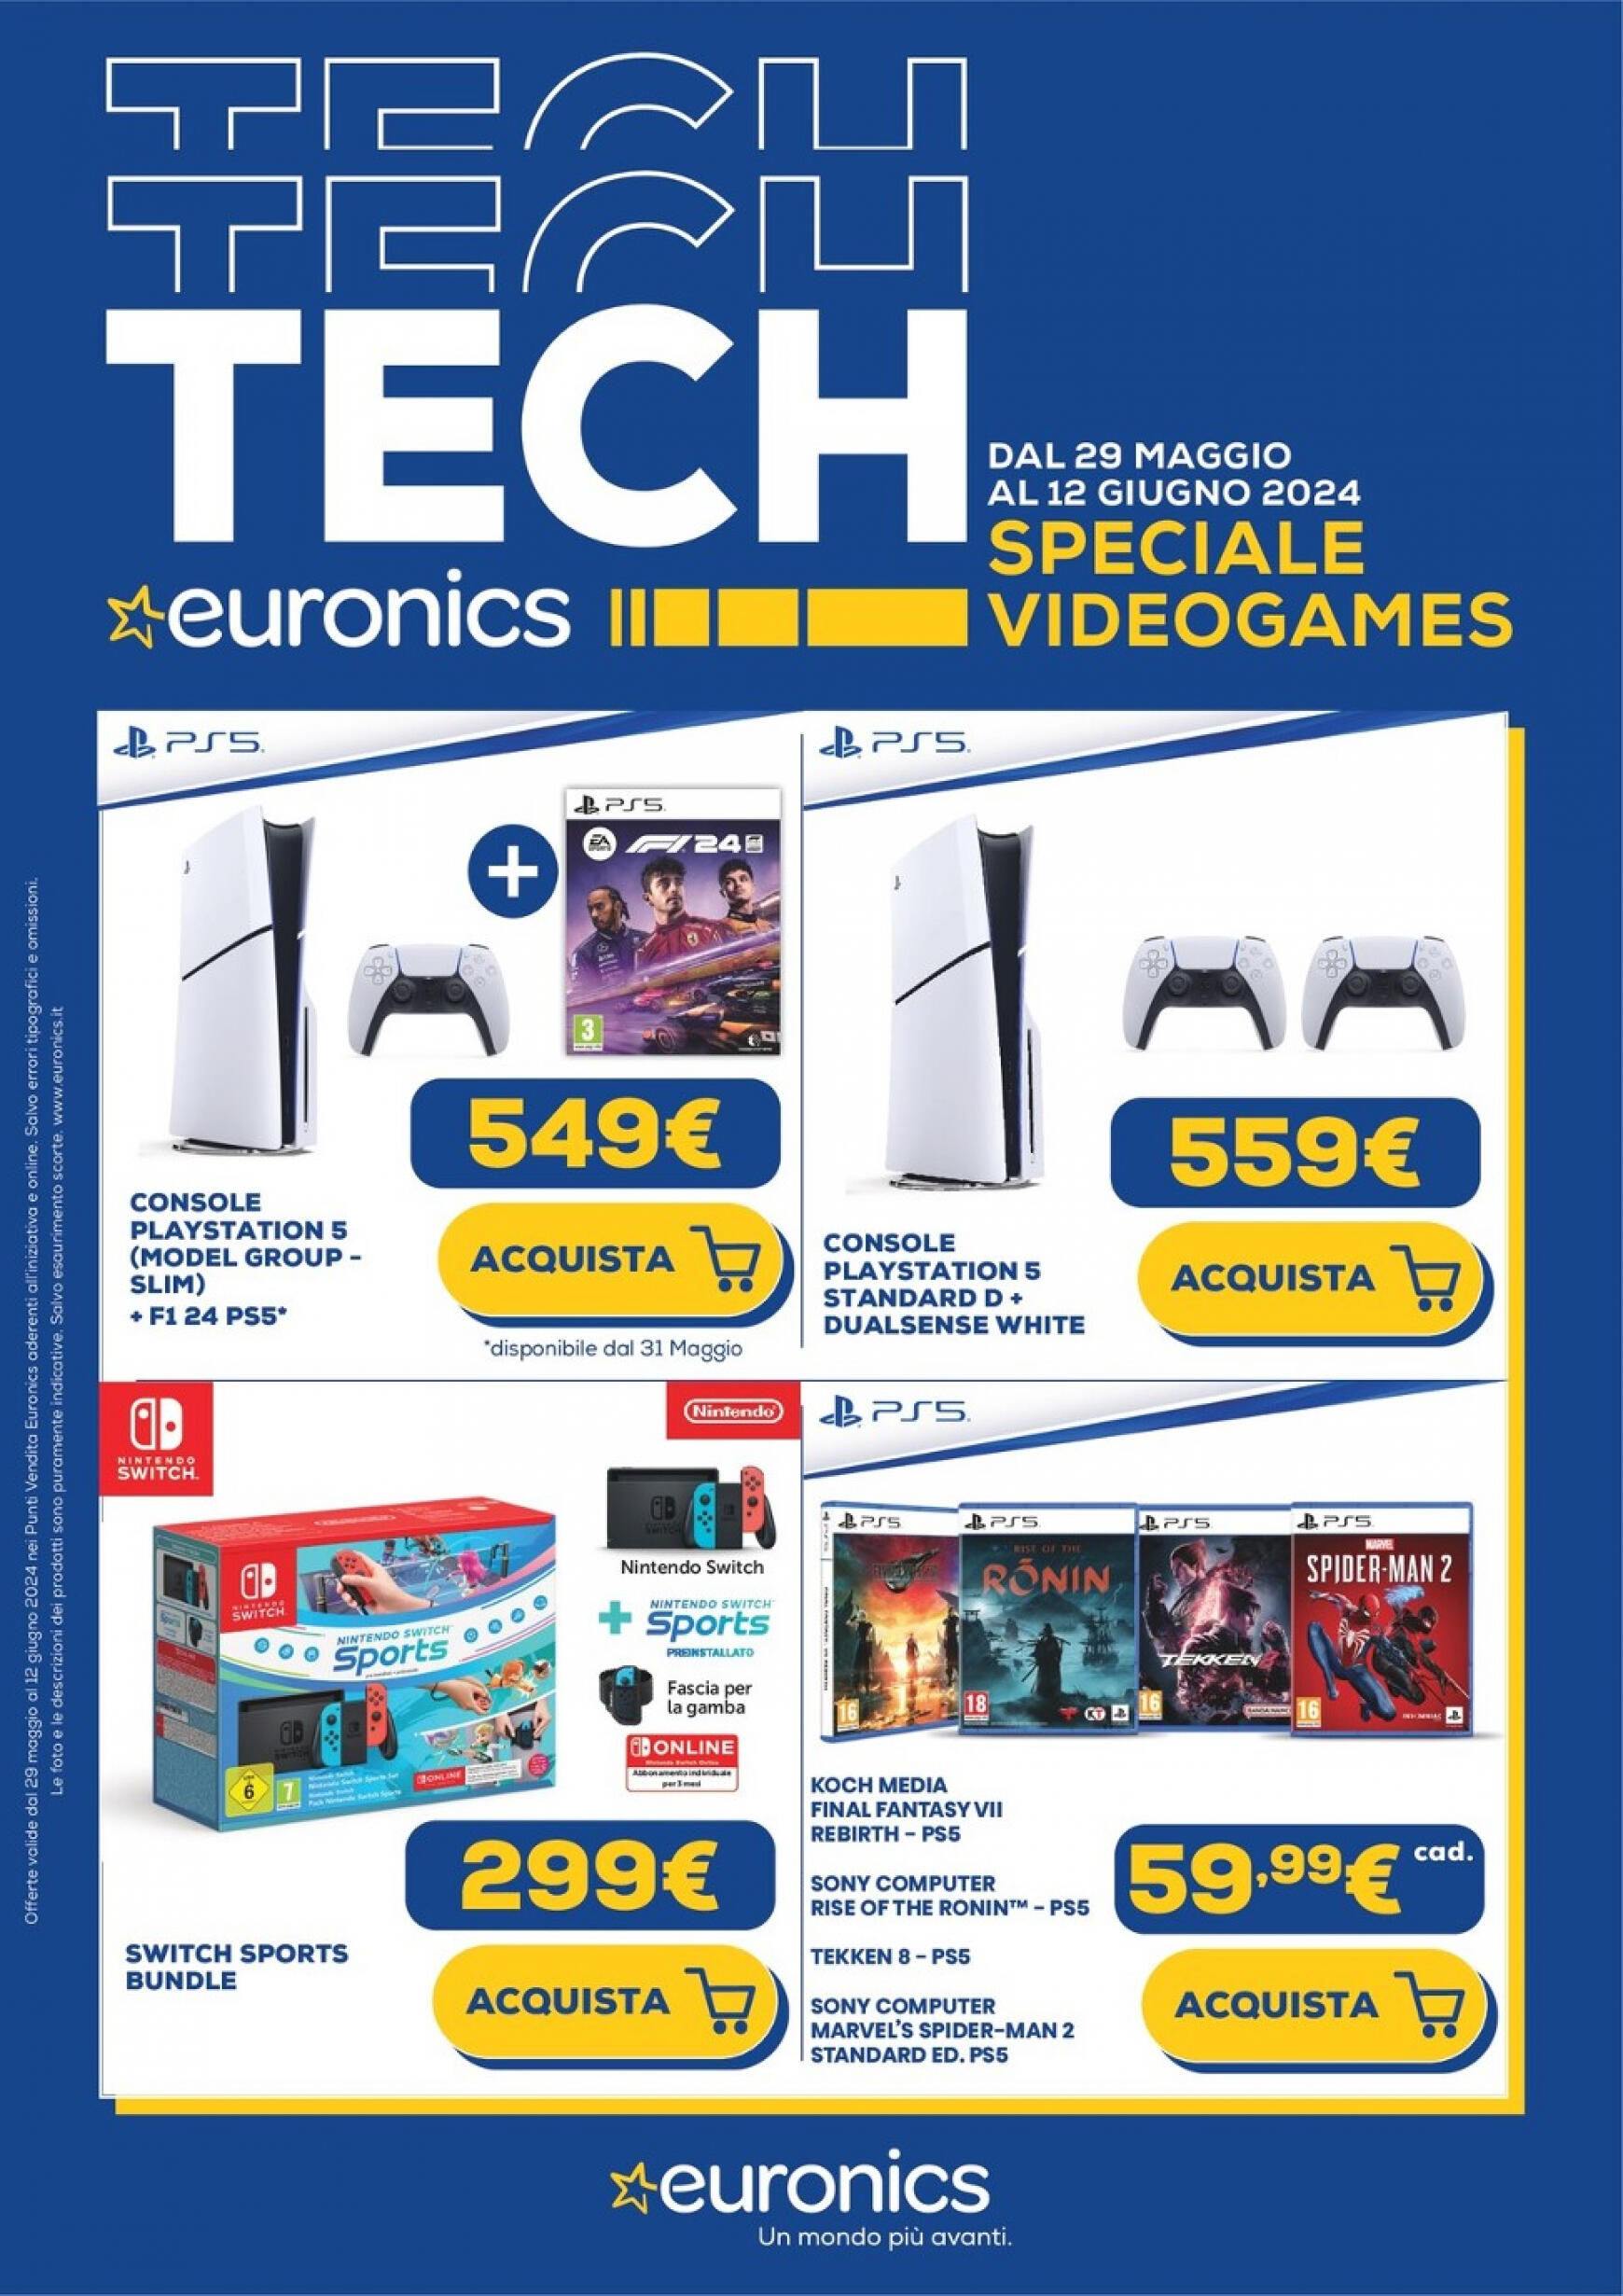 euronics - Nuovo volantino Euronics - Speciale Videogames 29.05. - 12.06. - page: 1